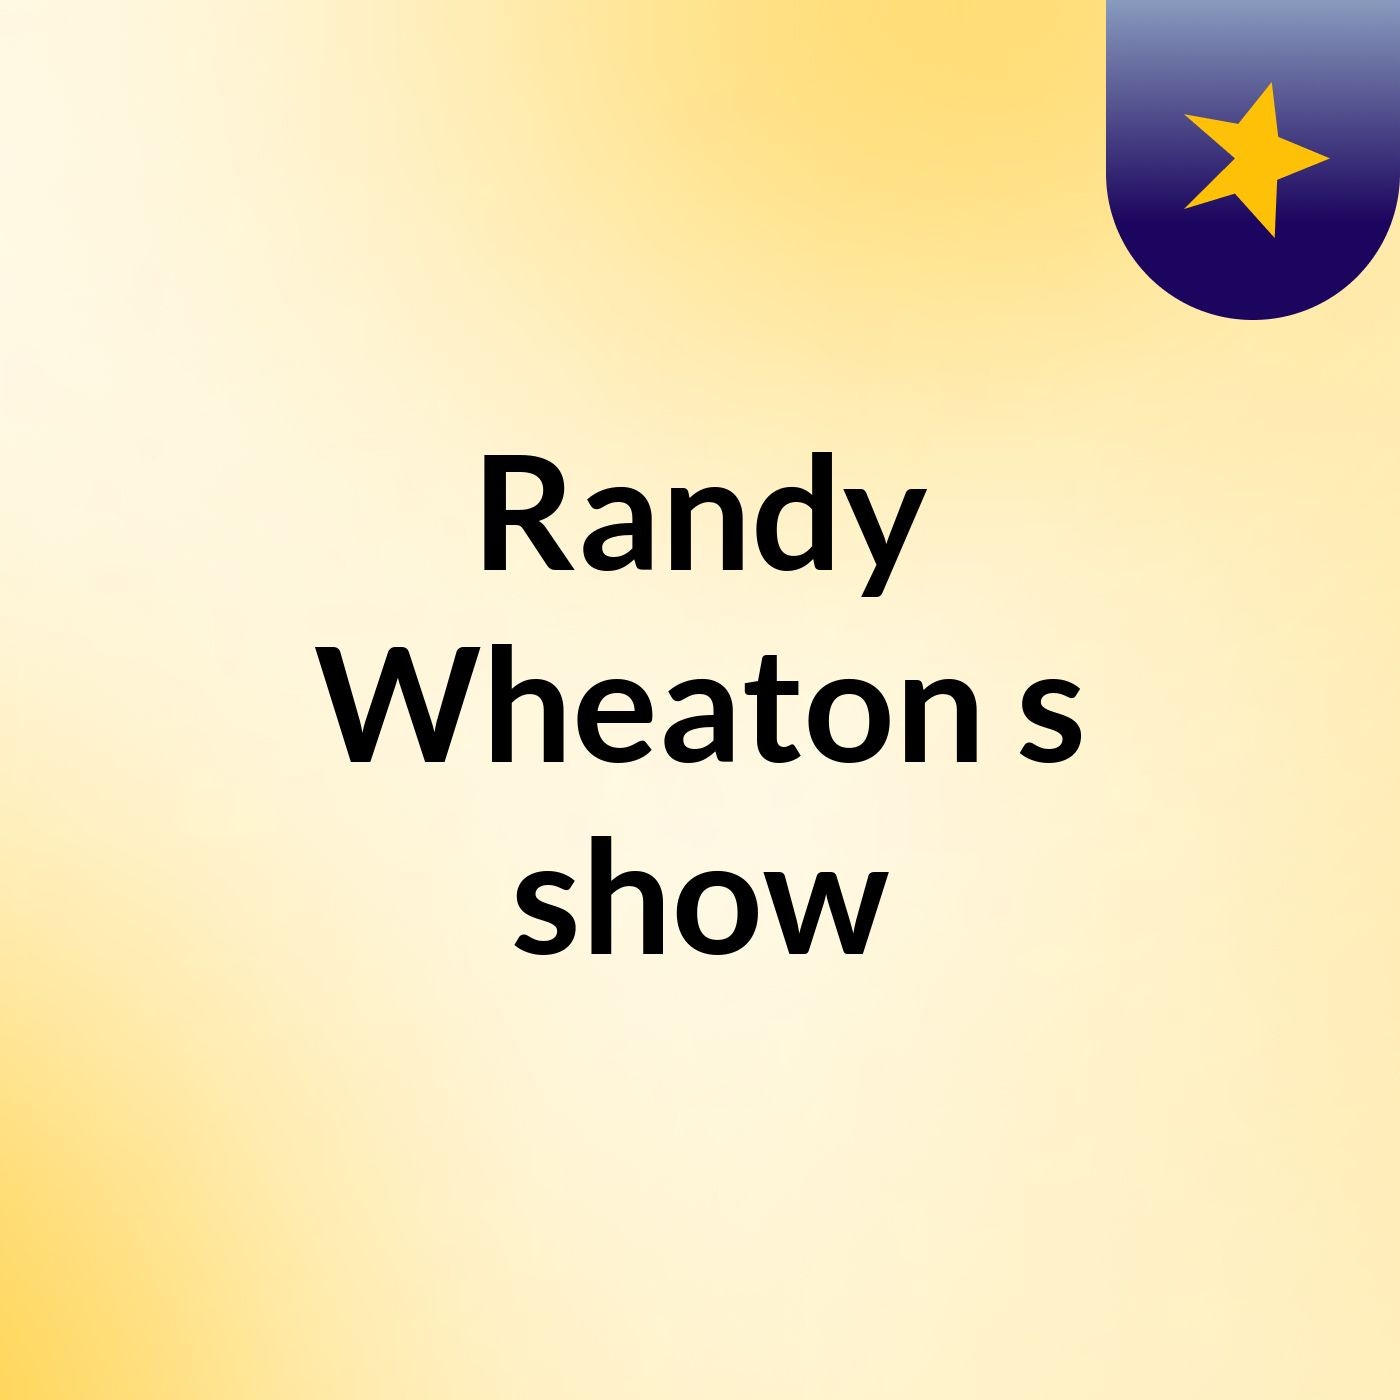 Episode 2 - Randy Wheaton's show